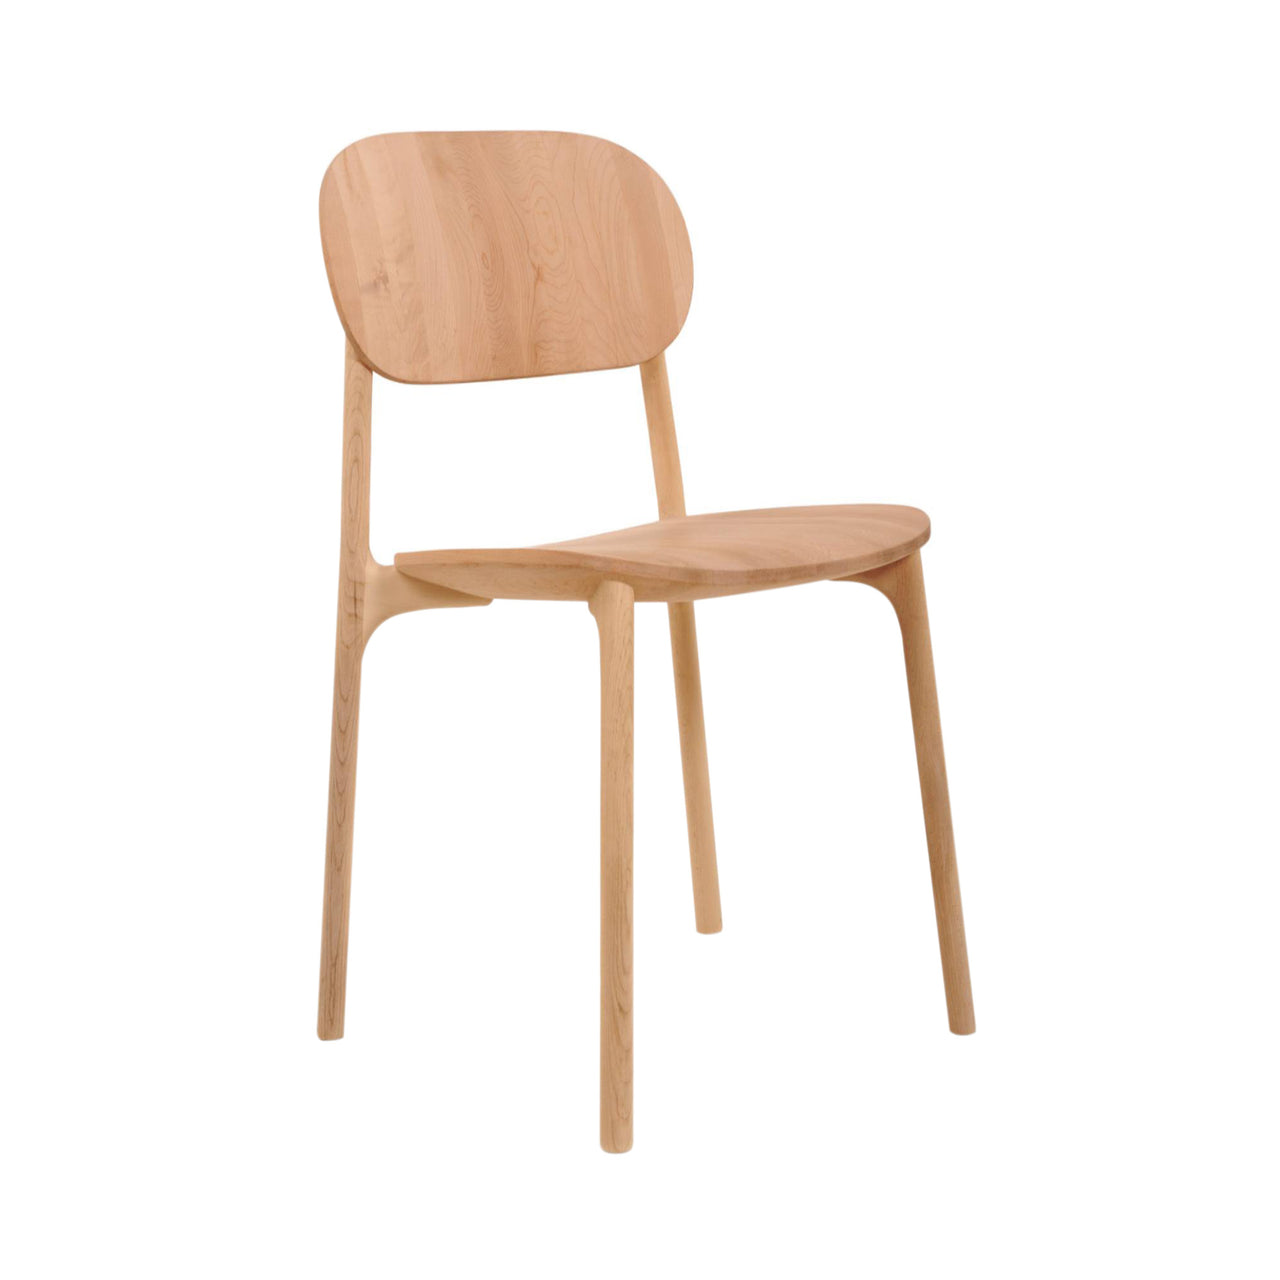 Unna Chair: Reshma Edge III + Oiled Oak + Black + Without Cushion